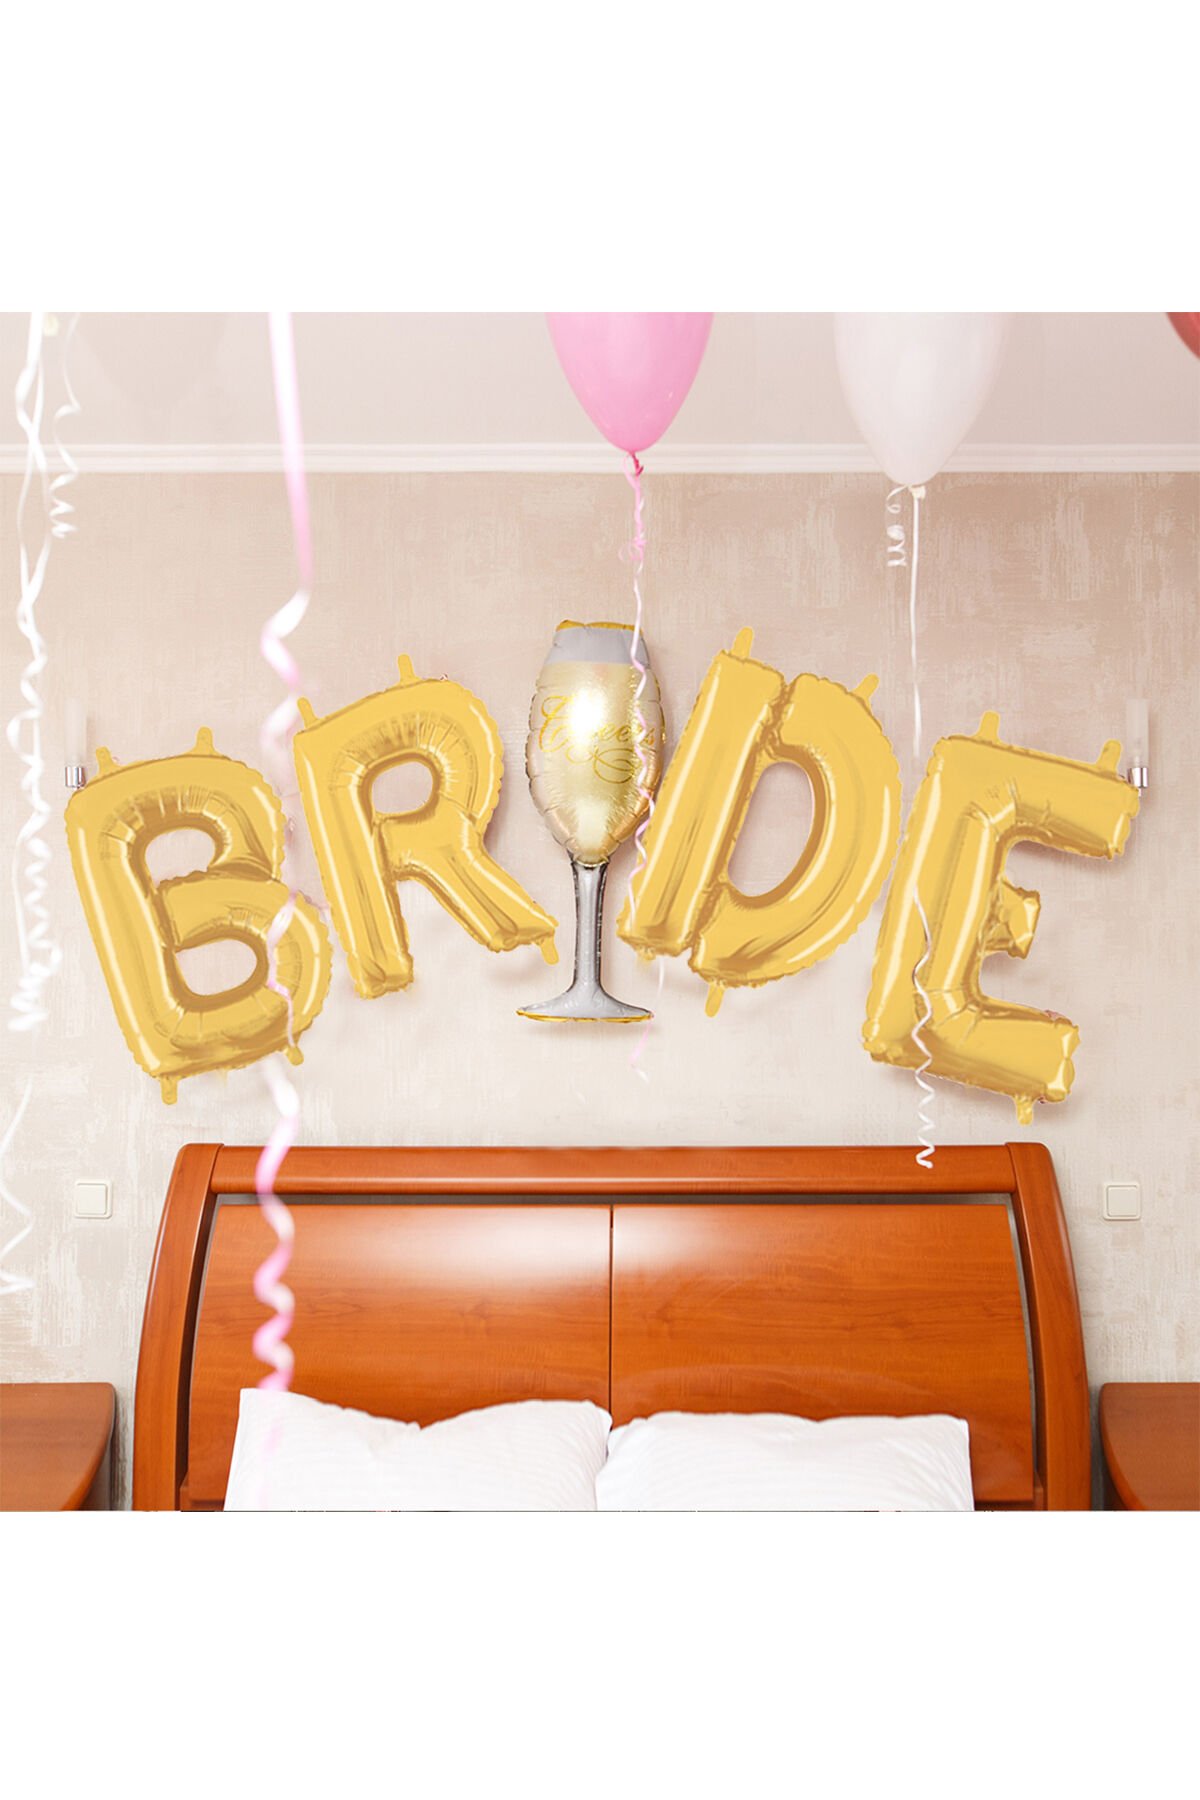 Bride Balon-Cheers 5 li Paket